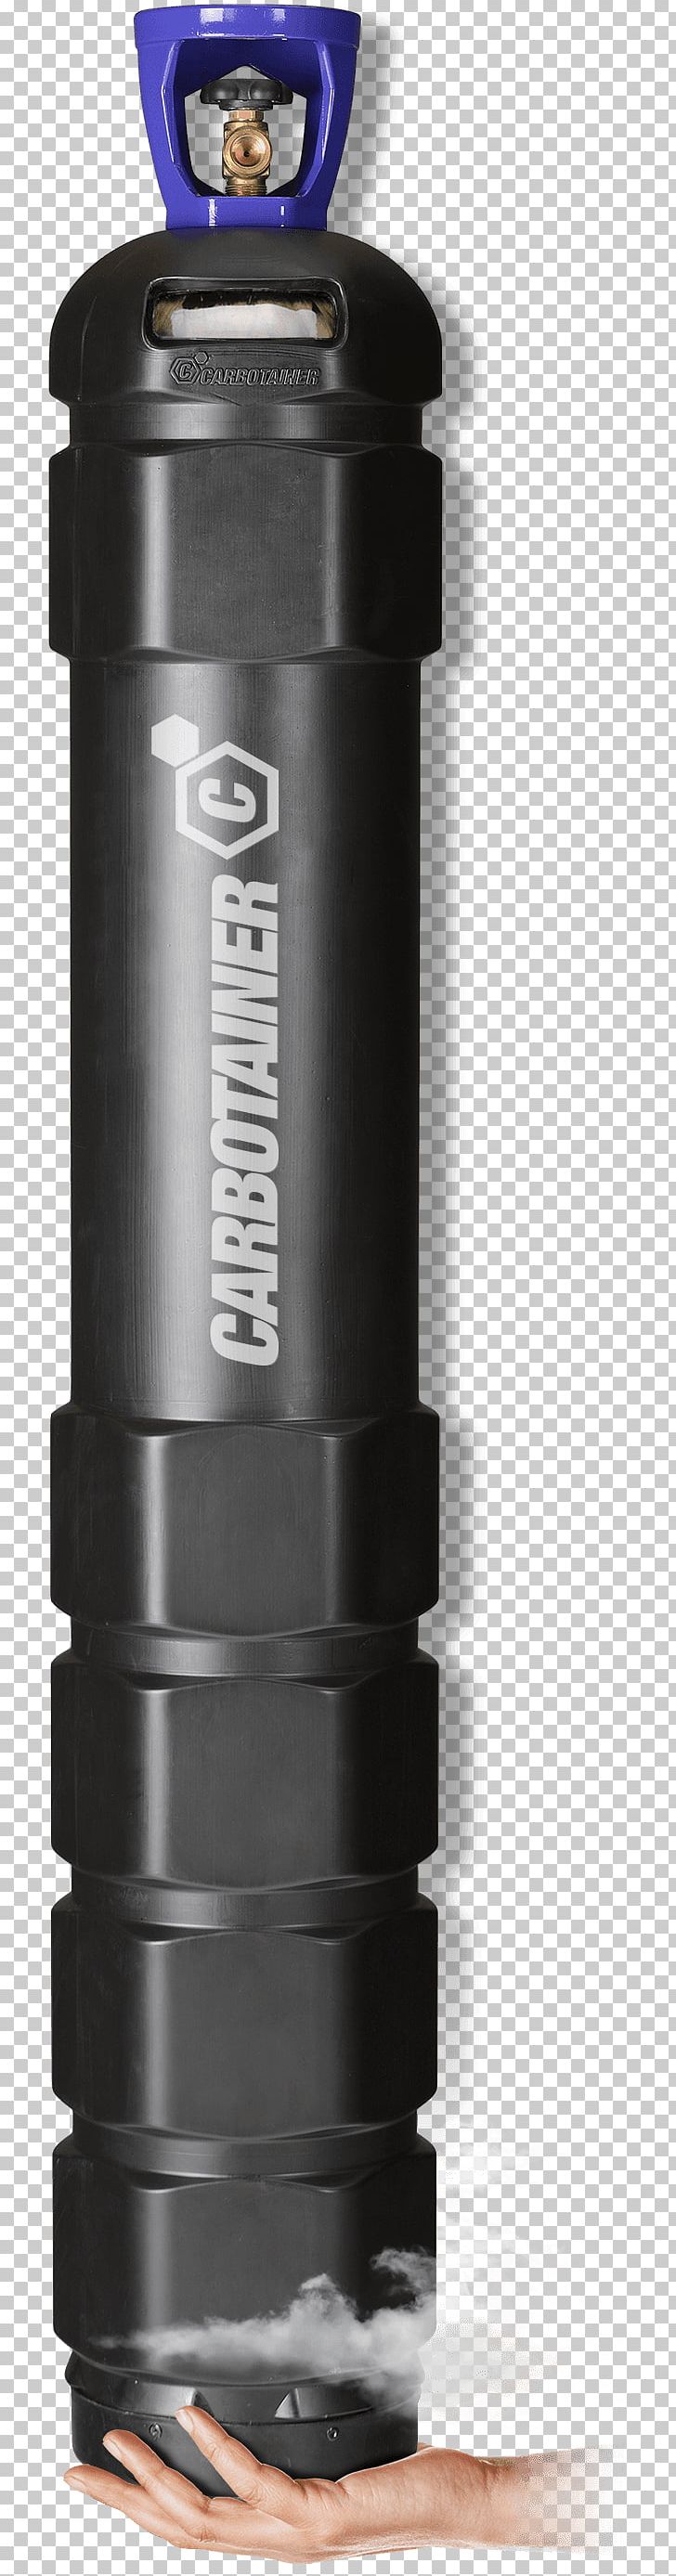 Gas Bottle Carbon Fibers Cylinder Air PNG, Clipart, Air, Bottle, Carbon, Carbon Fibers, Cylinder Free PNG Download